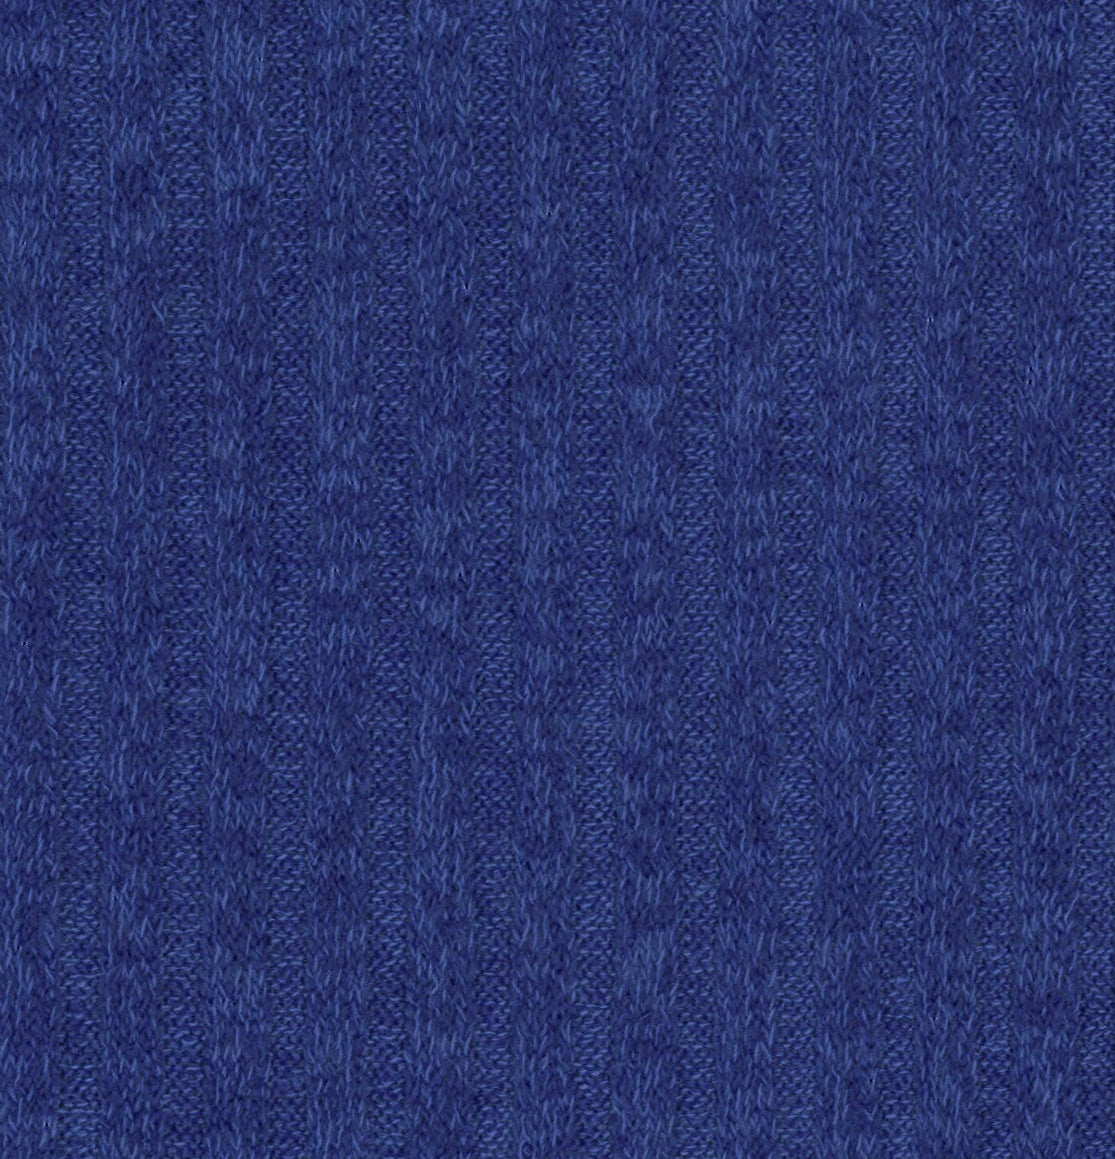 15012-11 Ashley Blue Rib Plain Dyed Blend 330g/yd 54" blend blue knit plain dyed polyester rayon rib spandex Solid Color, Rib - knit fabric - woven fabric - fabric company - fabric wholesale - fabric b2b - fabric factory - high quality fabric - hong kong fabric - fabric hk - acetate fabric - cotton fabric - linen fabric - metallic fabric - nylon fabric - polyester fabric - spandex fabric - chun wing hing - cwh hk - fabric worldwide ship - 針織布 - 梳織布 - 布料公司- 布料批發 - 香港布料 - 秦榮興